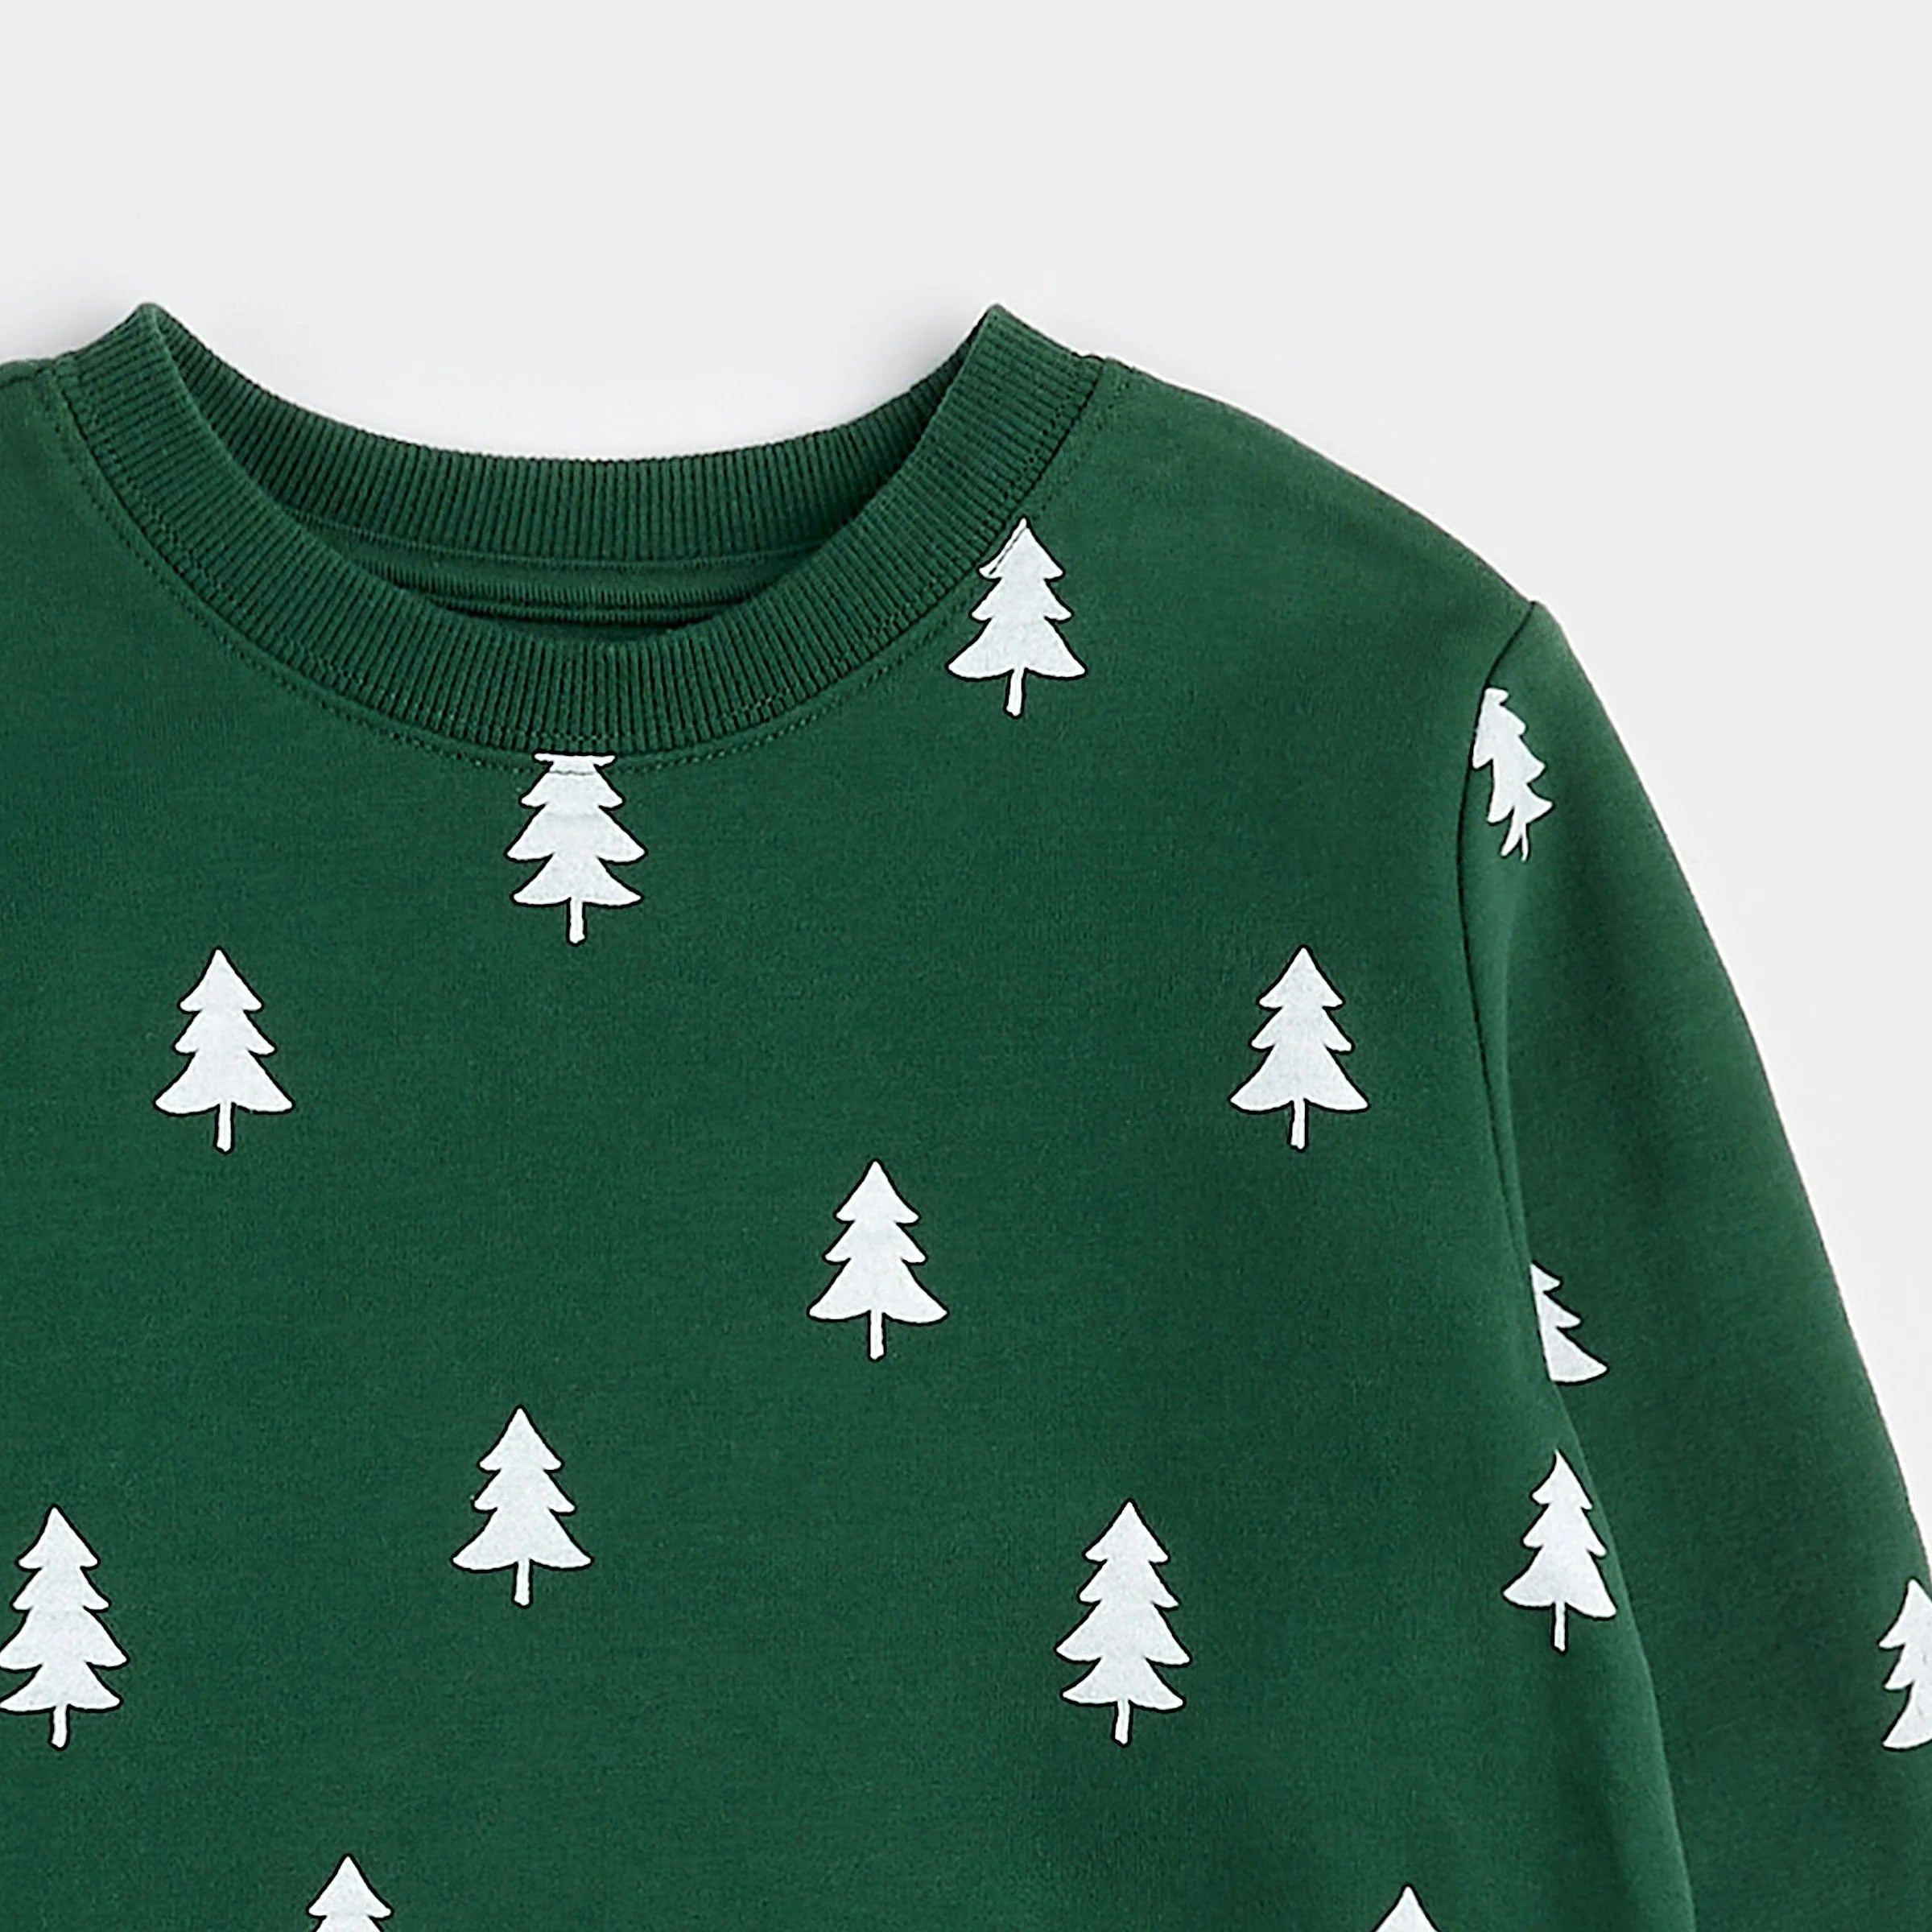 Petit Lem - Fir Tree Sweater